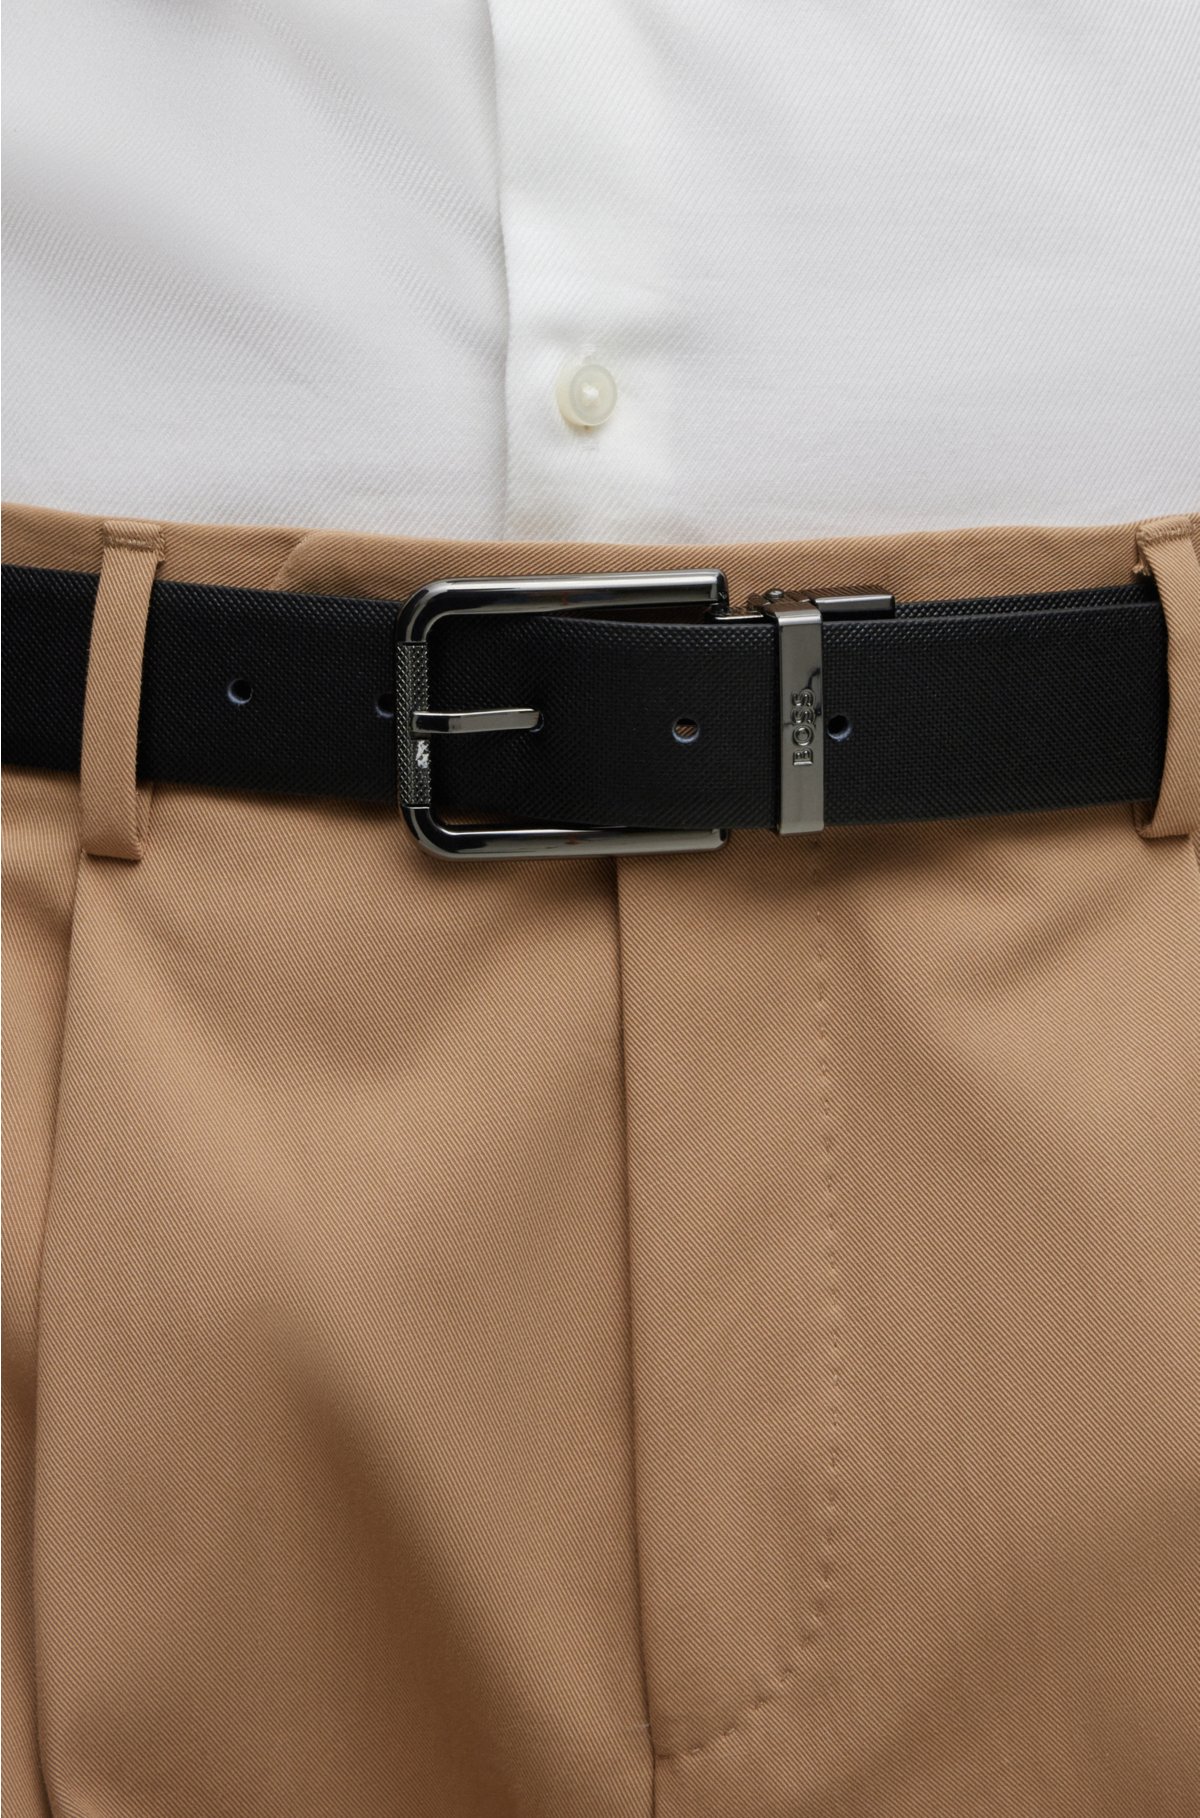 BOSS - Reversible Italian-leather belt with branded keeper